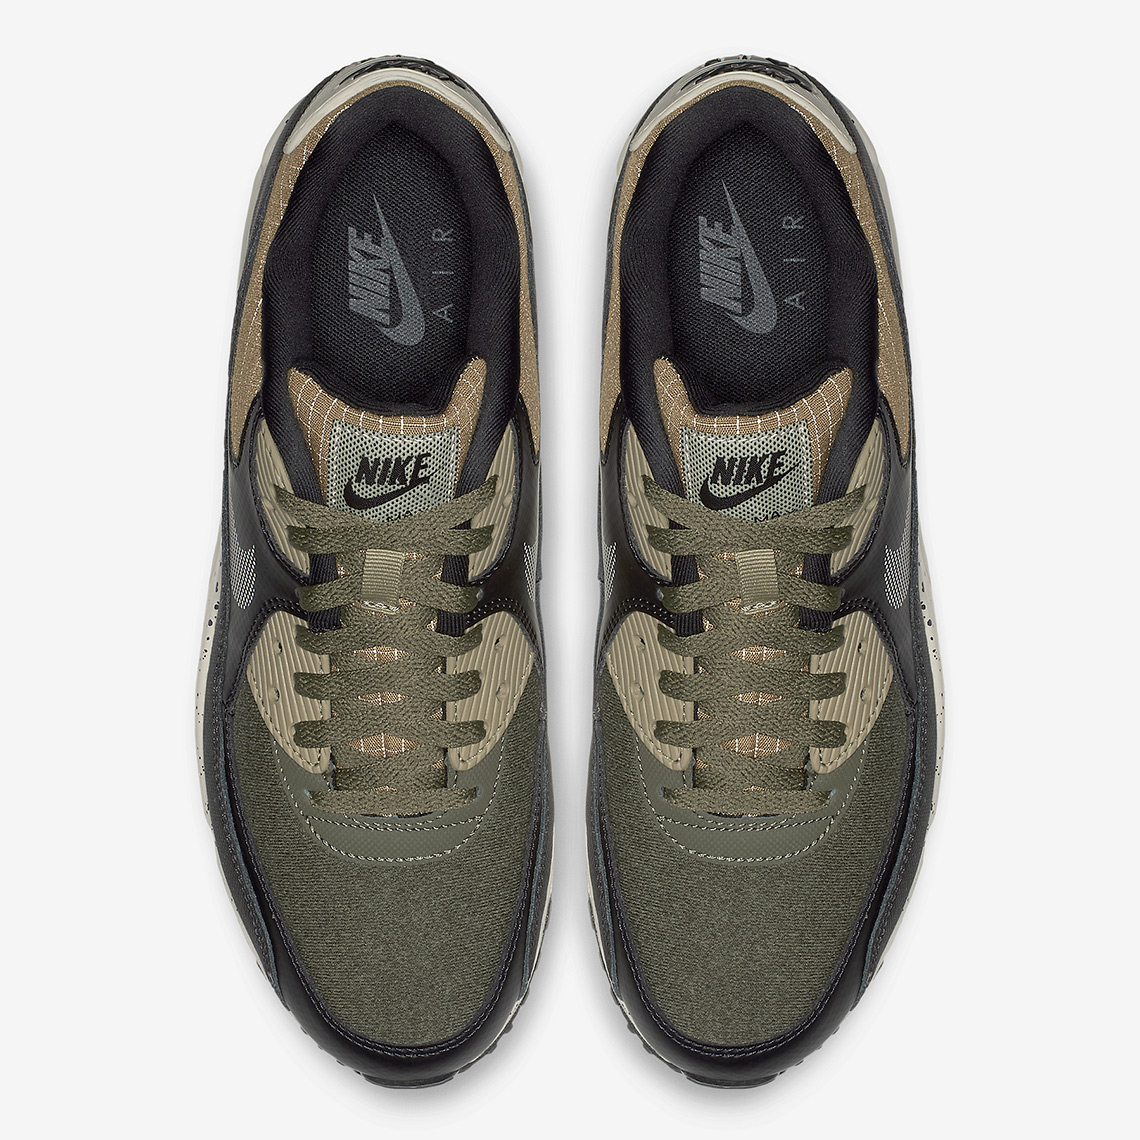 Nike Air Max 90 Olive/Black 700155-203 Release Info | SneakerNews.com